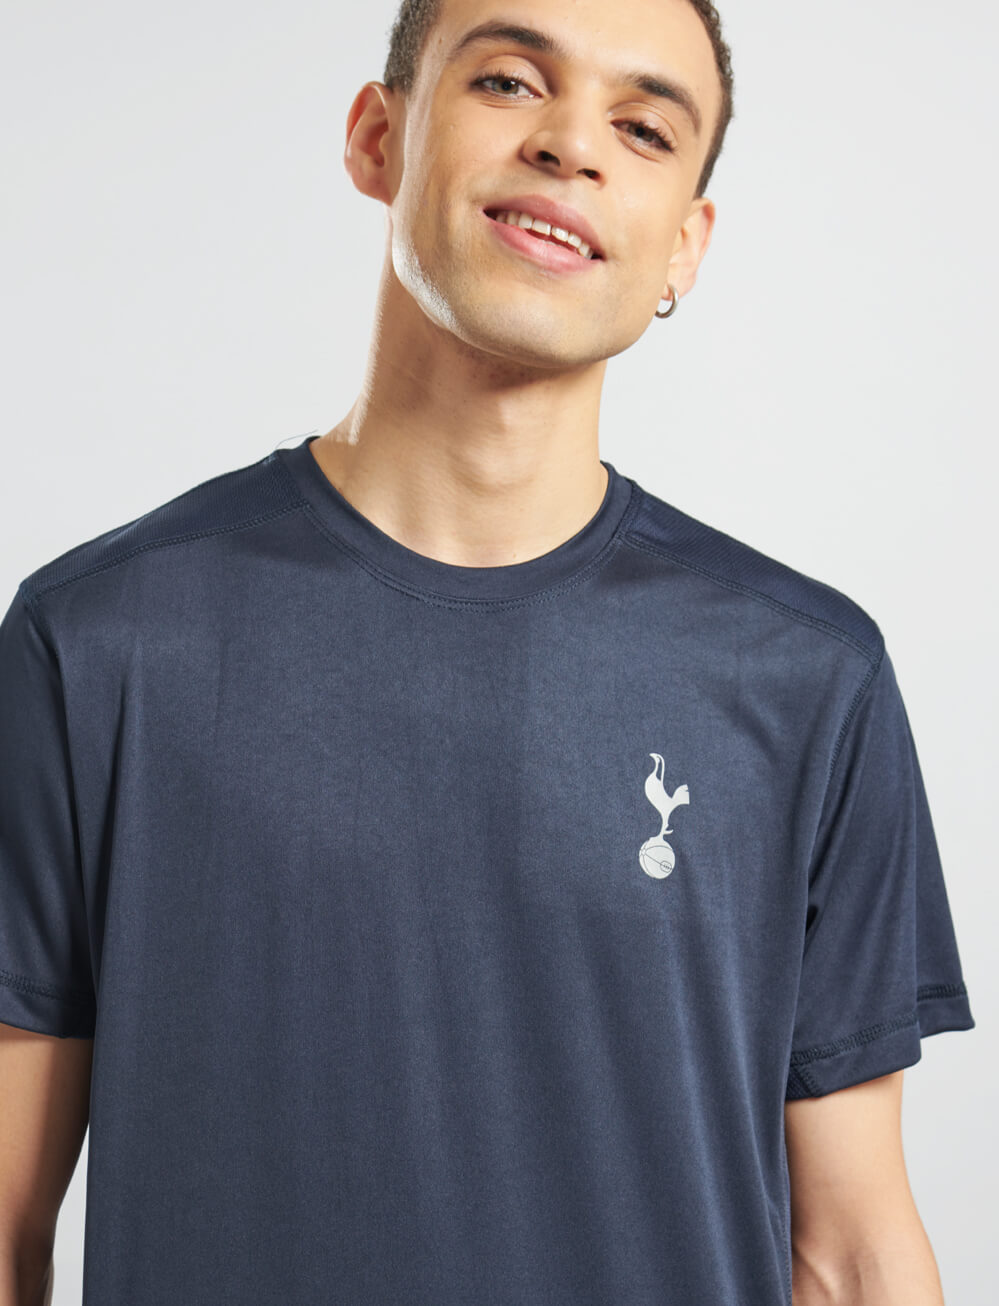 Official Tottenham T-Shirt - Navy - The World Football Store